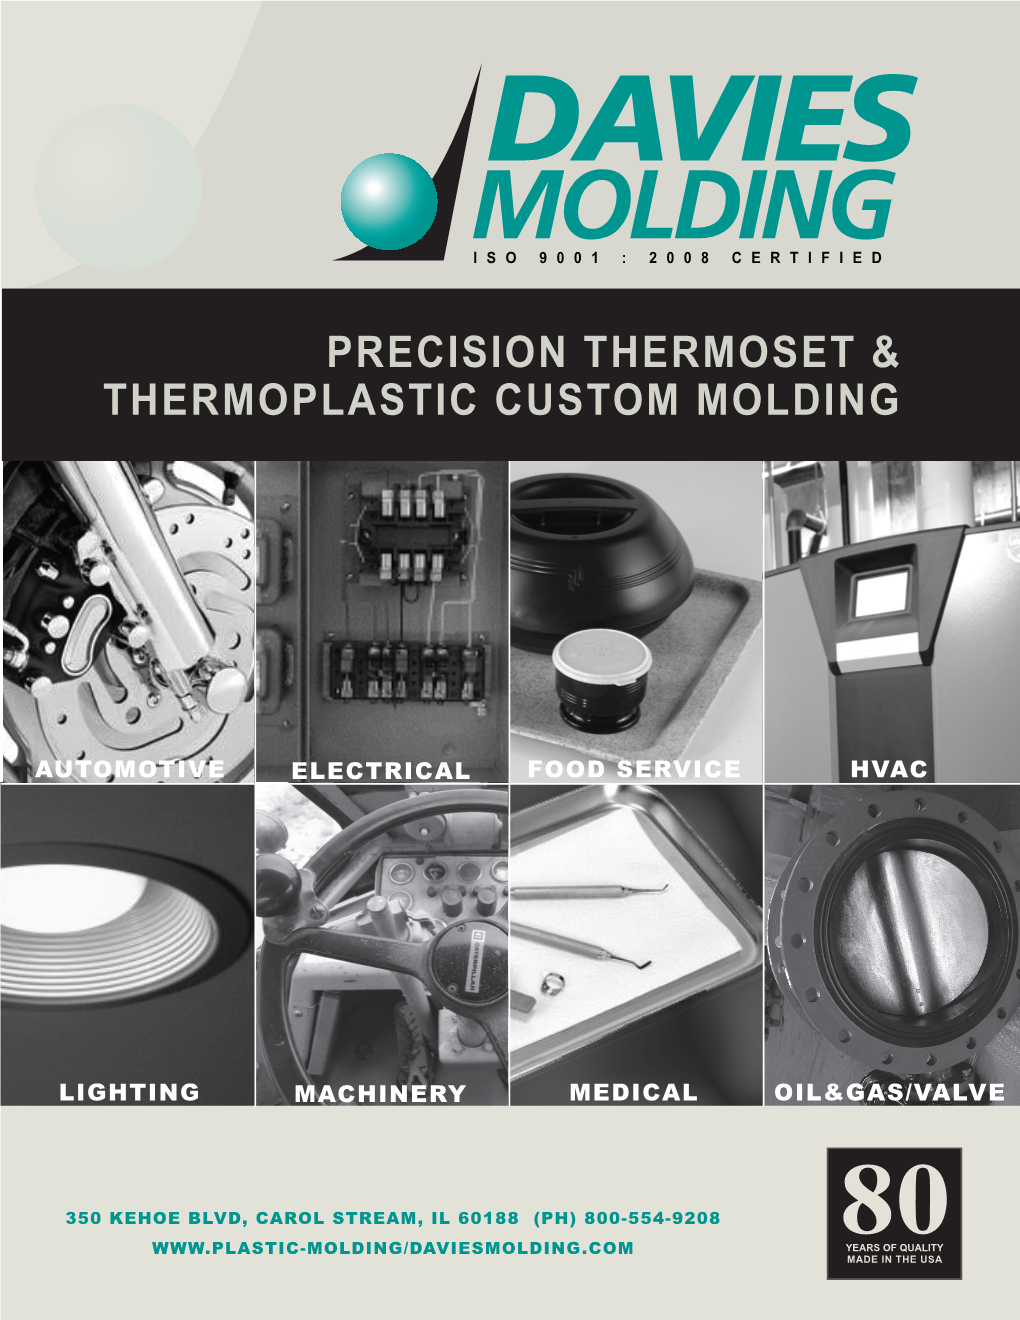 Precision Thermoset & Thermoplastic Custom Molding